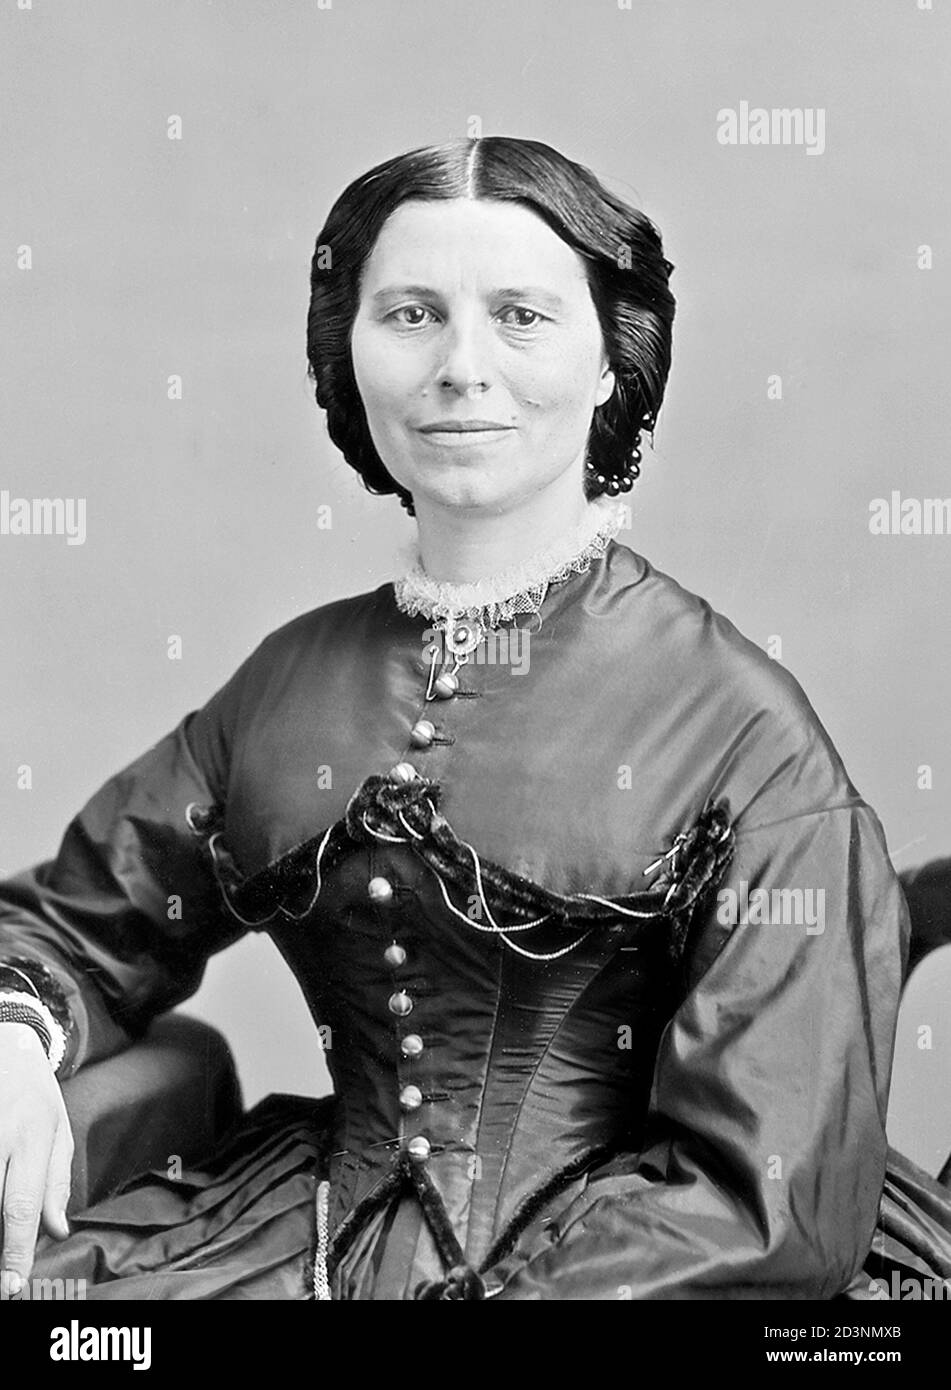 Clara Barton. Portrait de l'infirmière et fondateur de l'American Red Cross, Clarissa Harlowe' 'Clara Barton (1821-1912), par Matthew Brady, c.1865. Banque D'Images